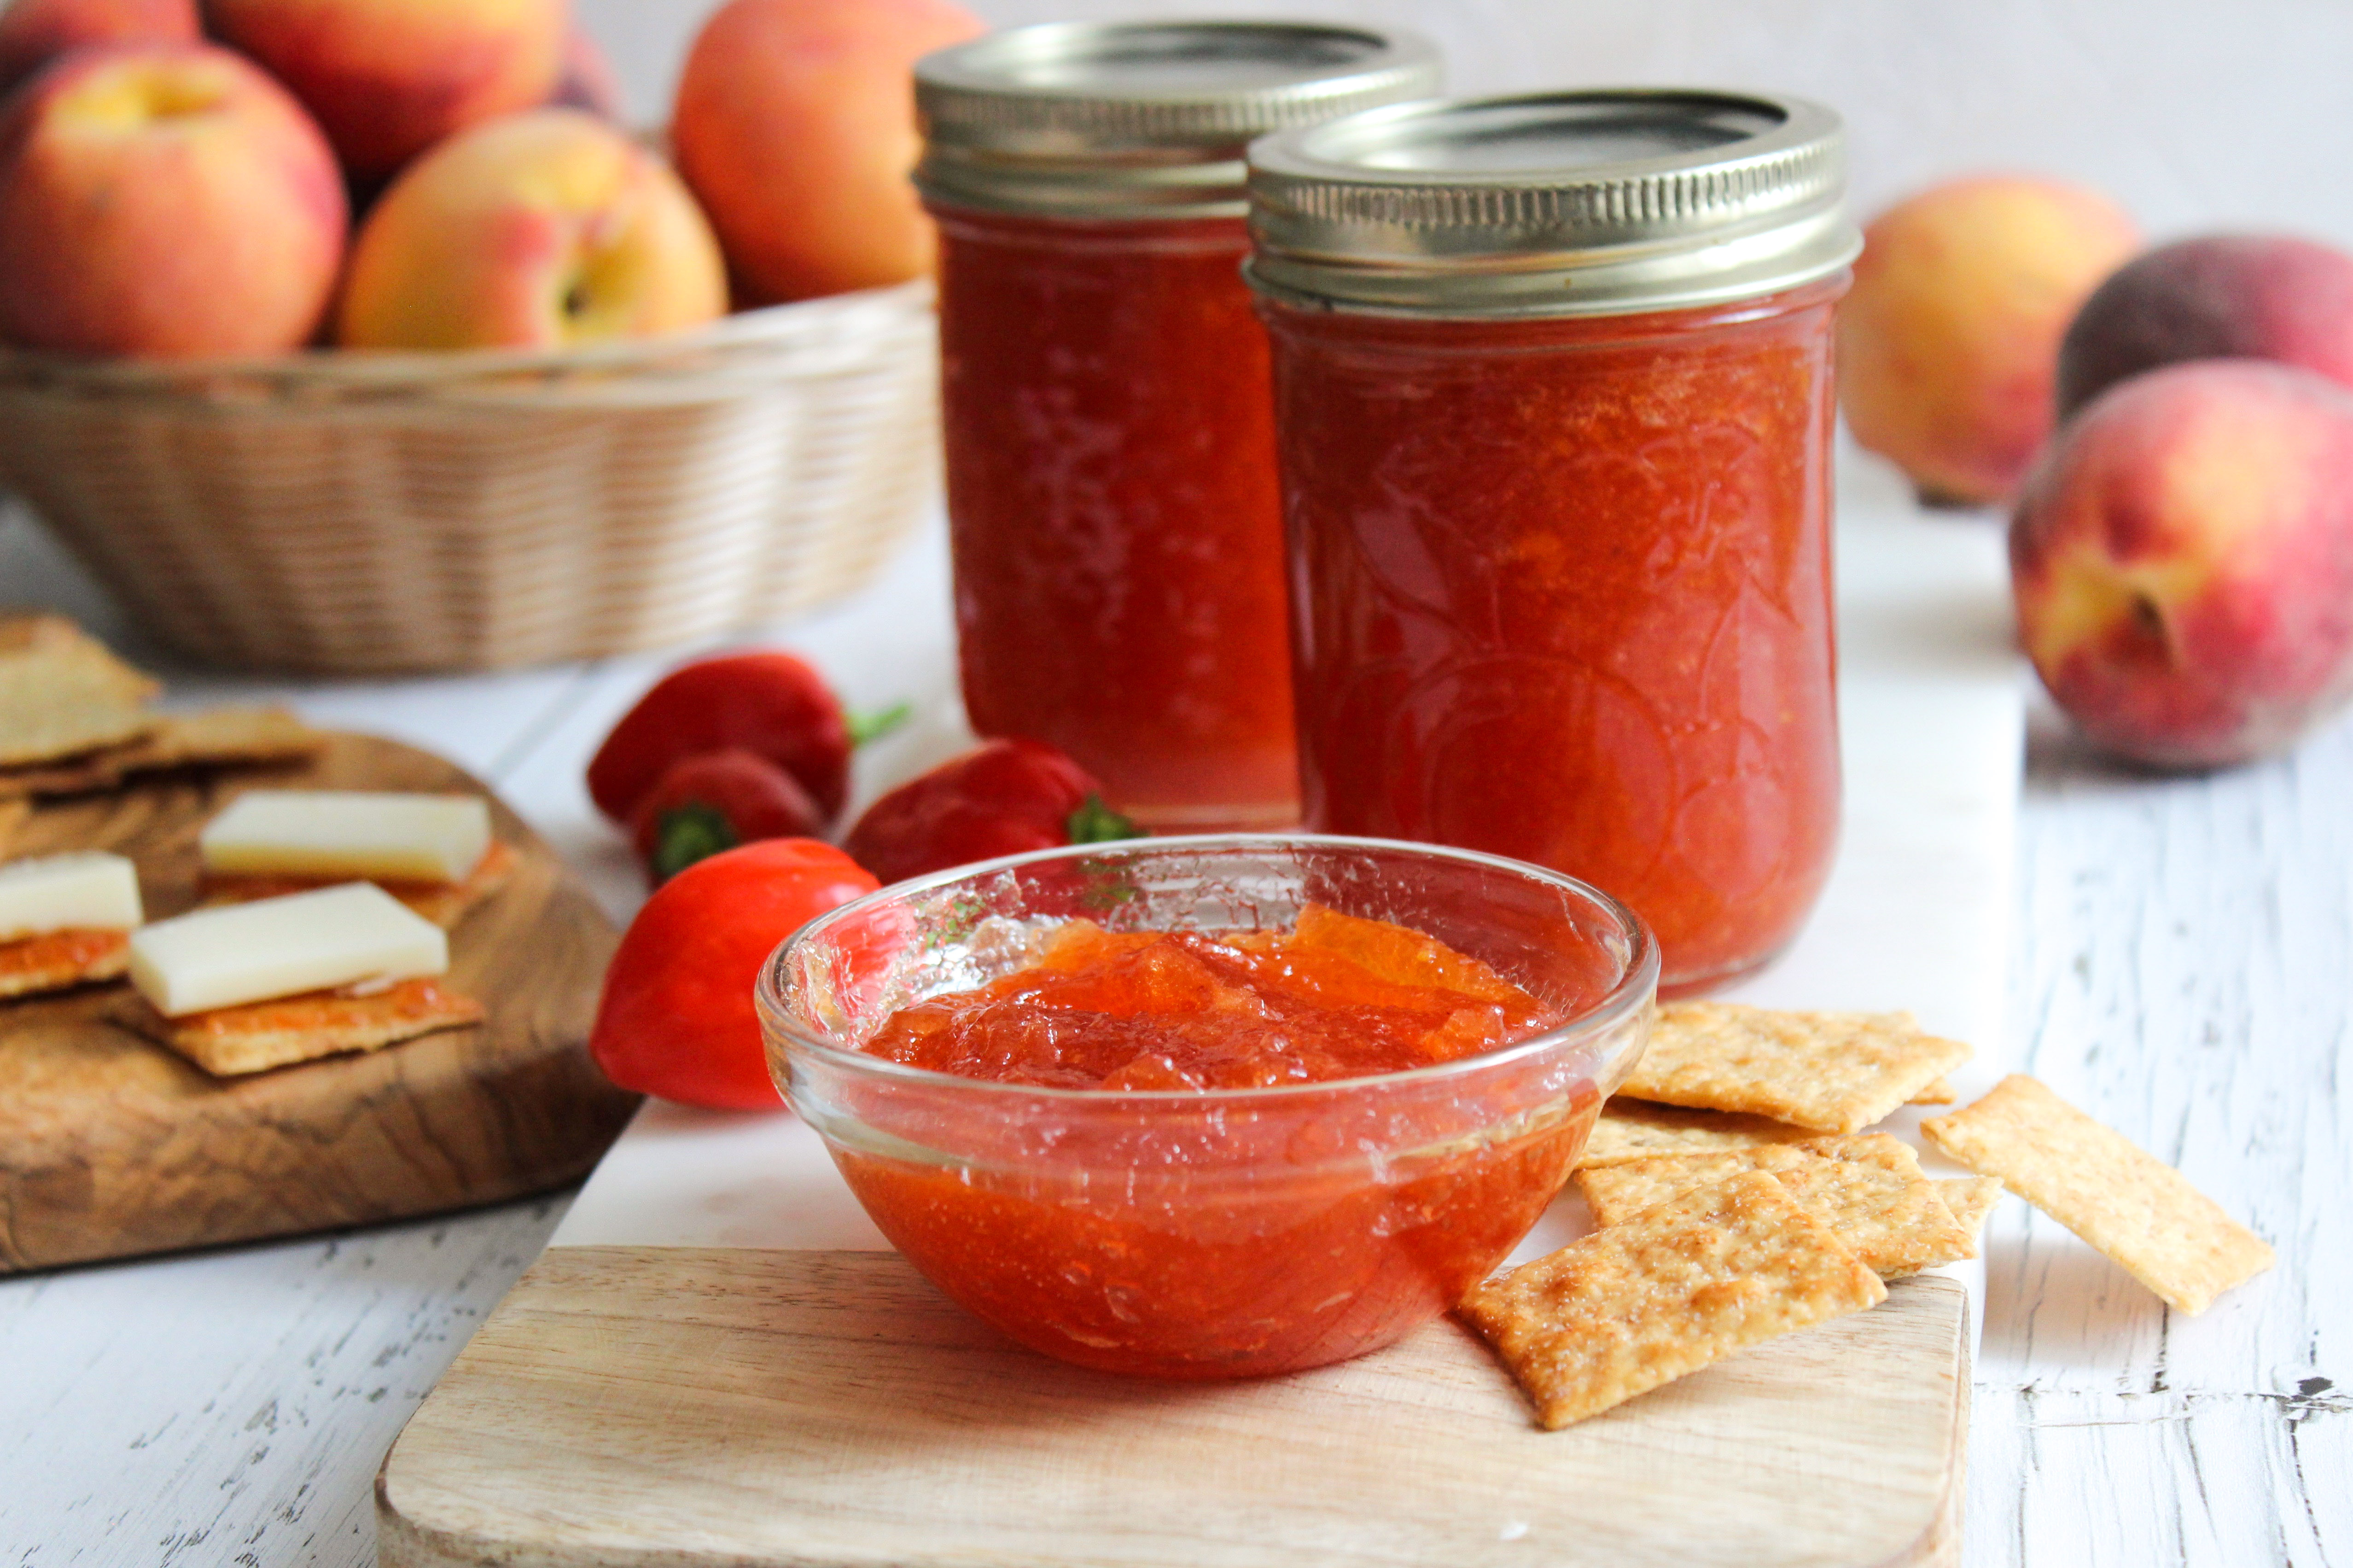 Peach and habanero pepper jam